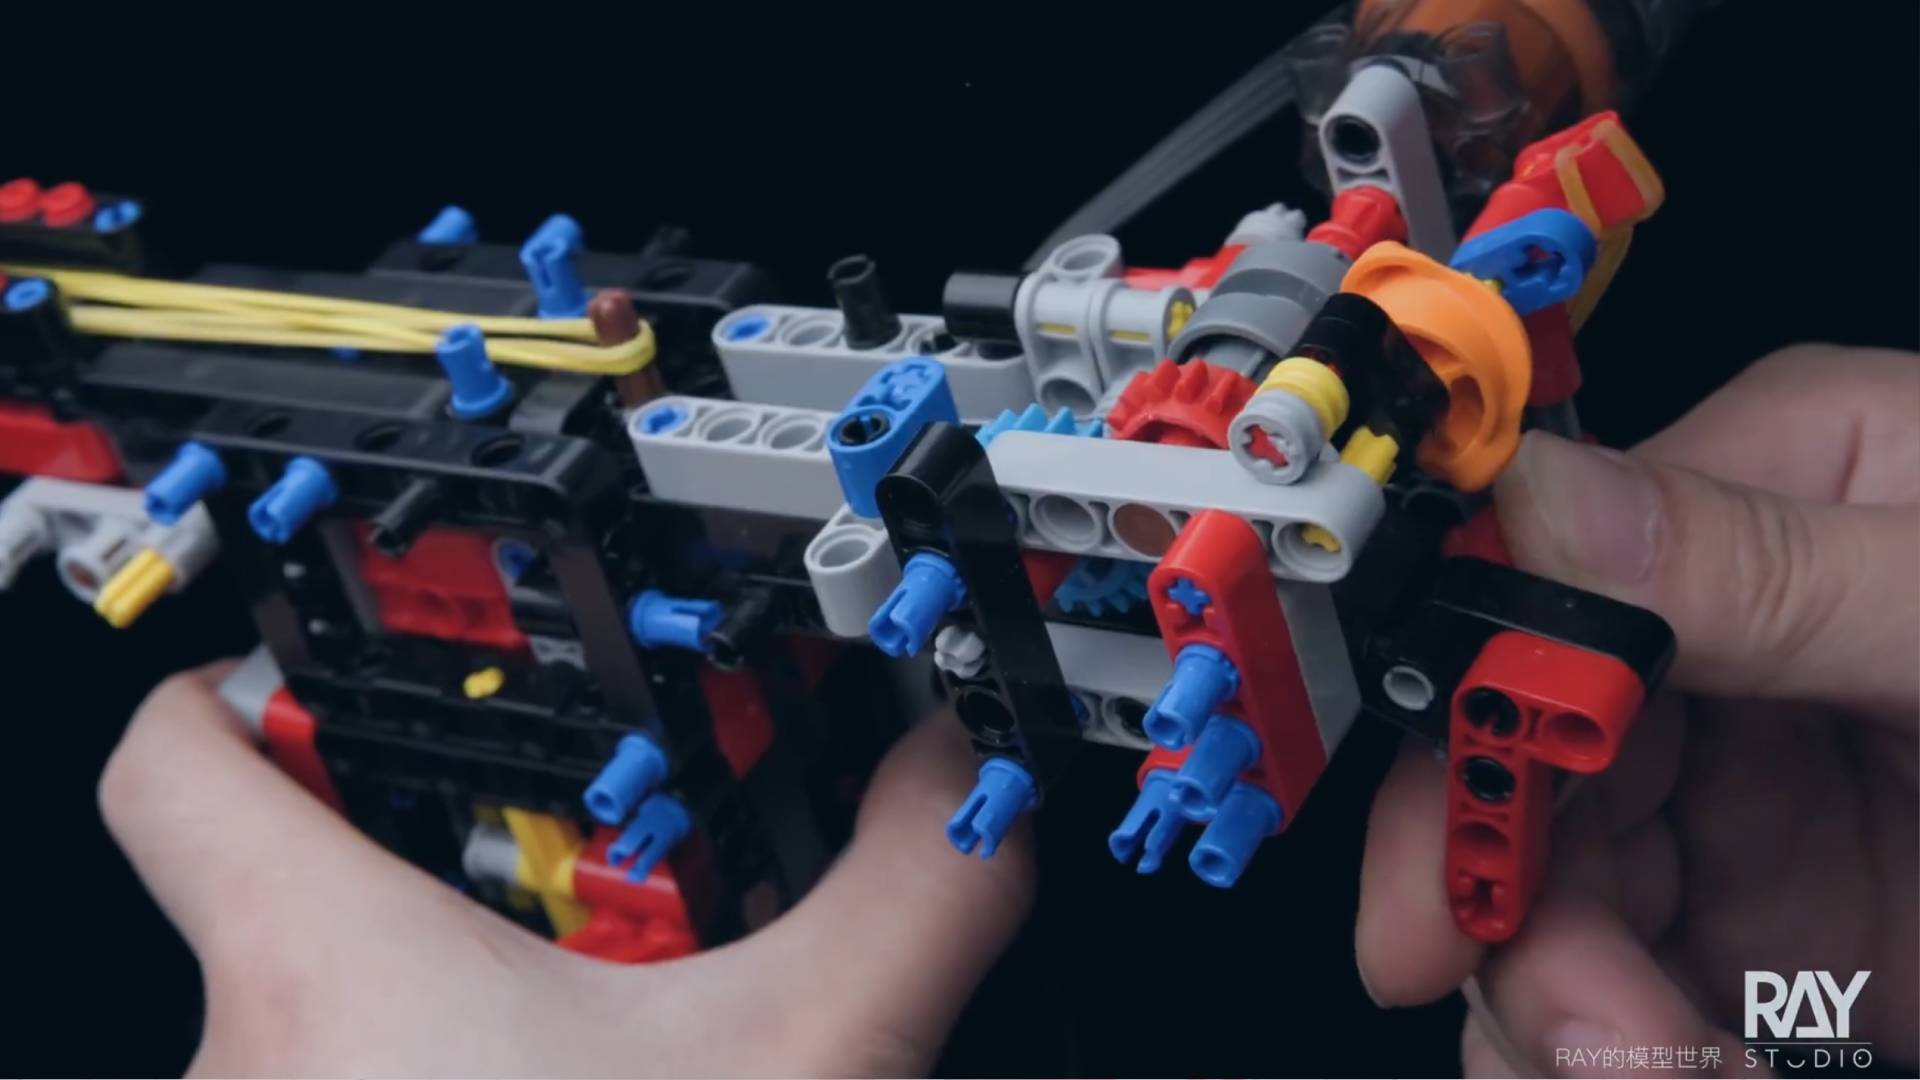 RAY的模型世界團隊利用車輛原本的零件，做出了可以射擊LEGO磚塊的運動部件